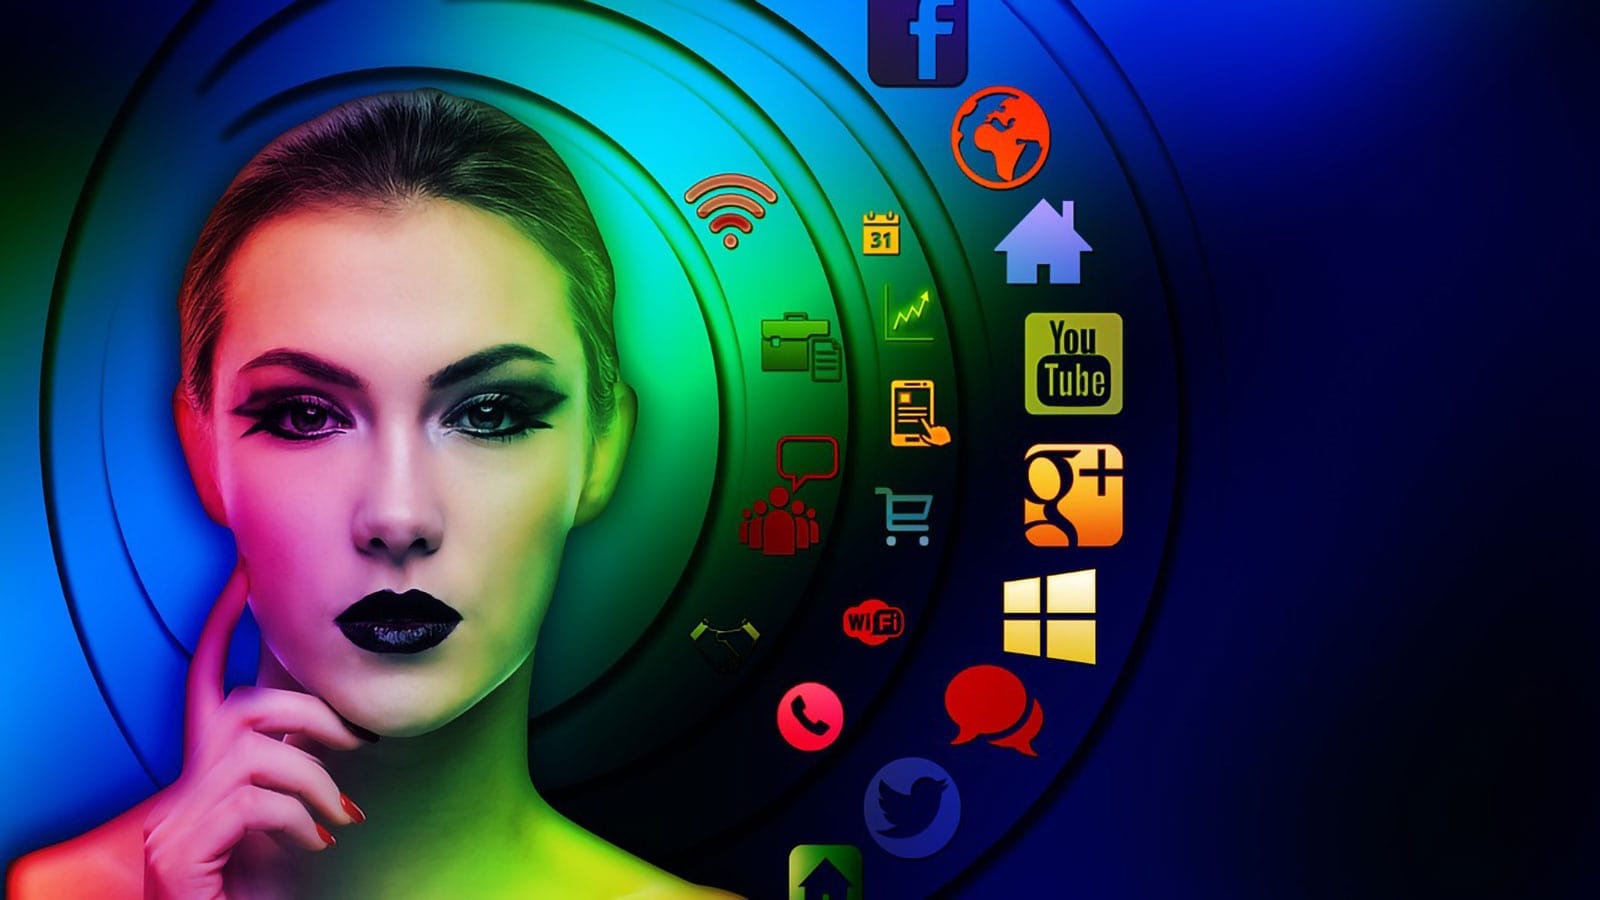 Top 5 Ways to Drive Sales Using Social Media